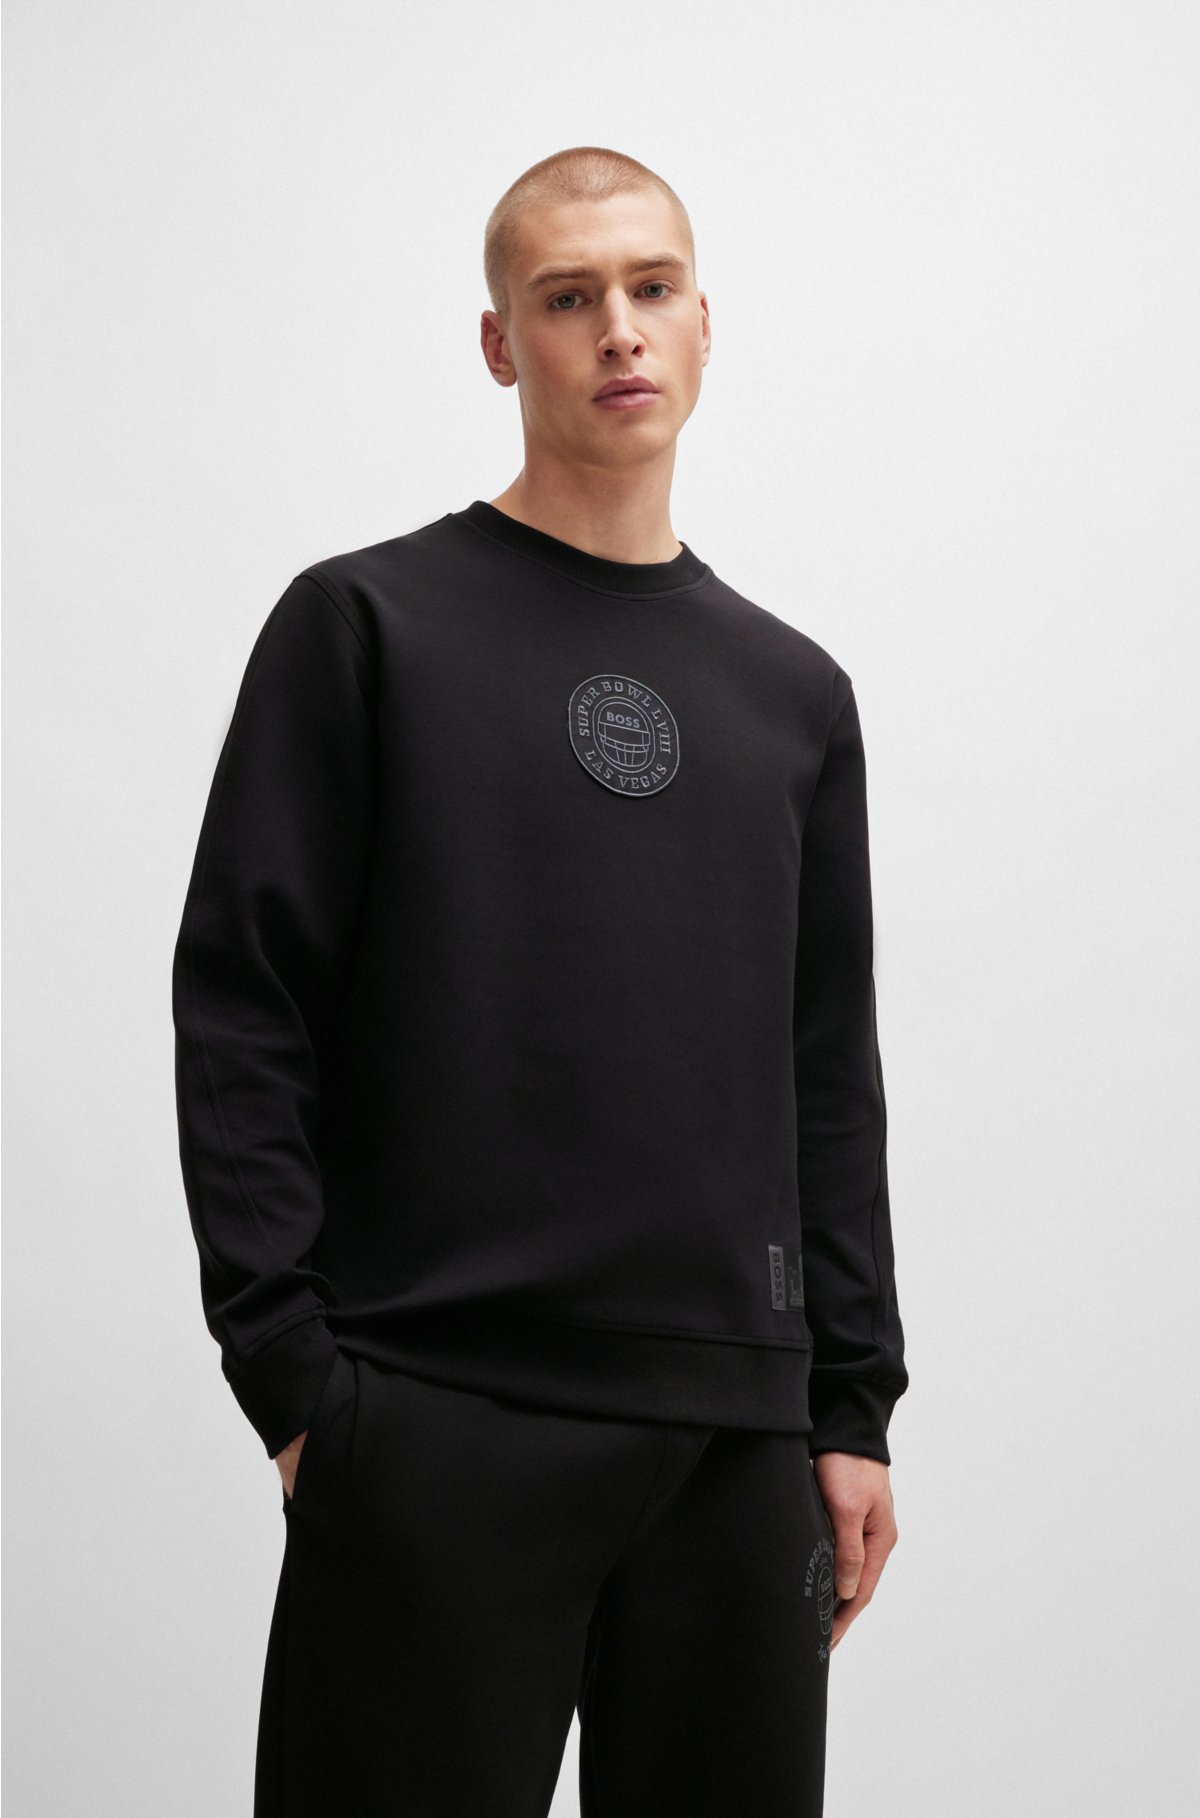 BOSS x NFL cotton-blend sweatshirt with metallic print, Black